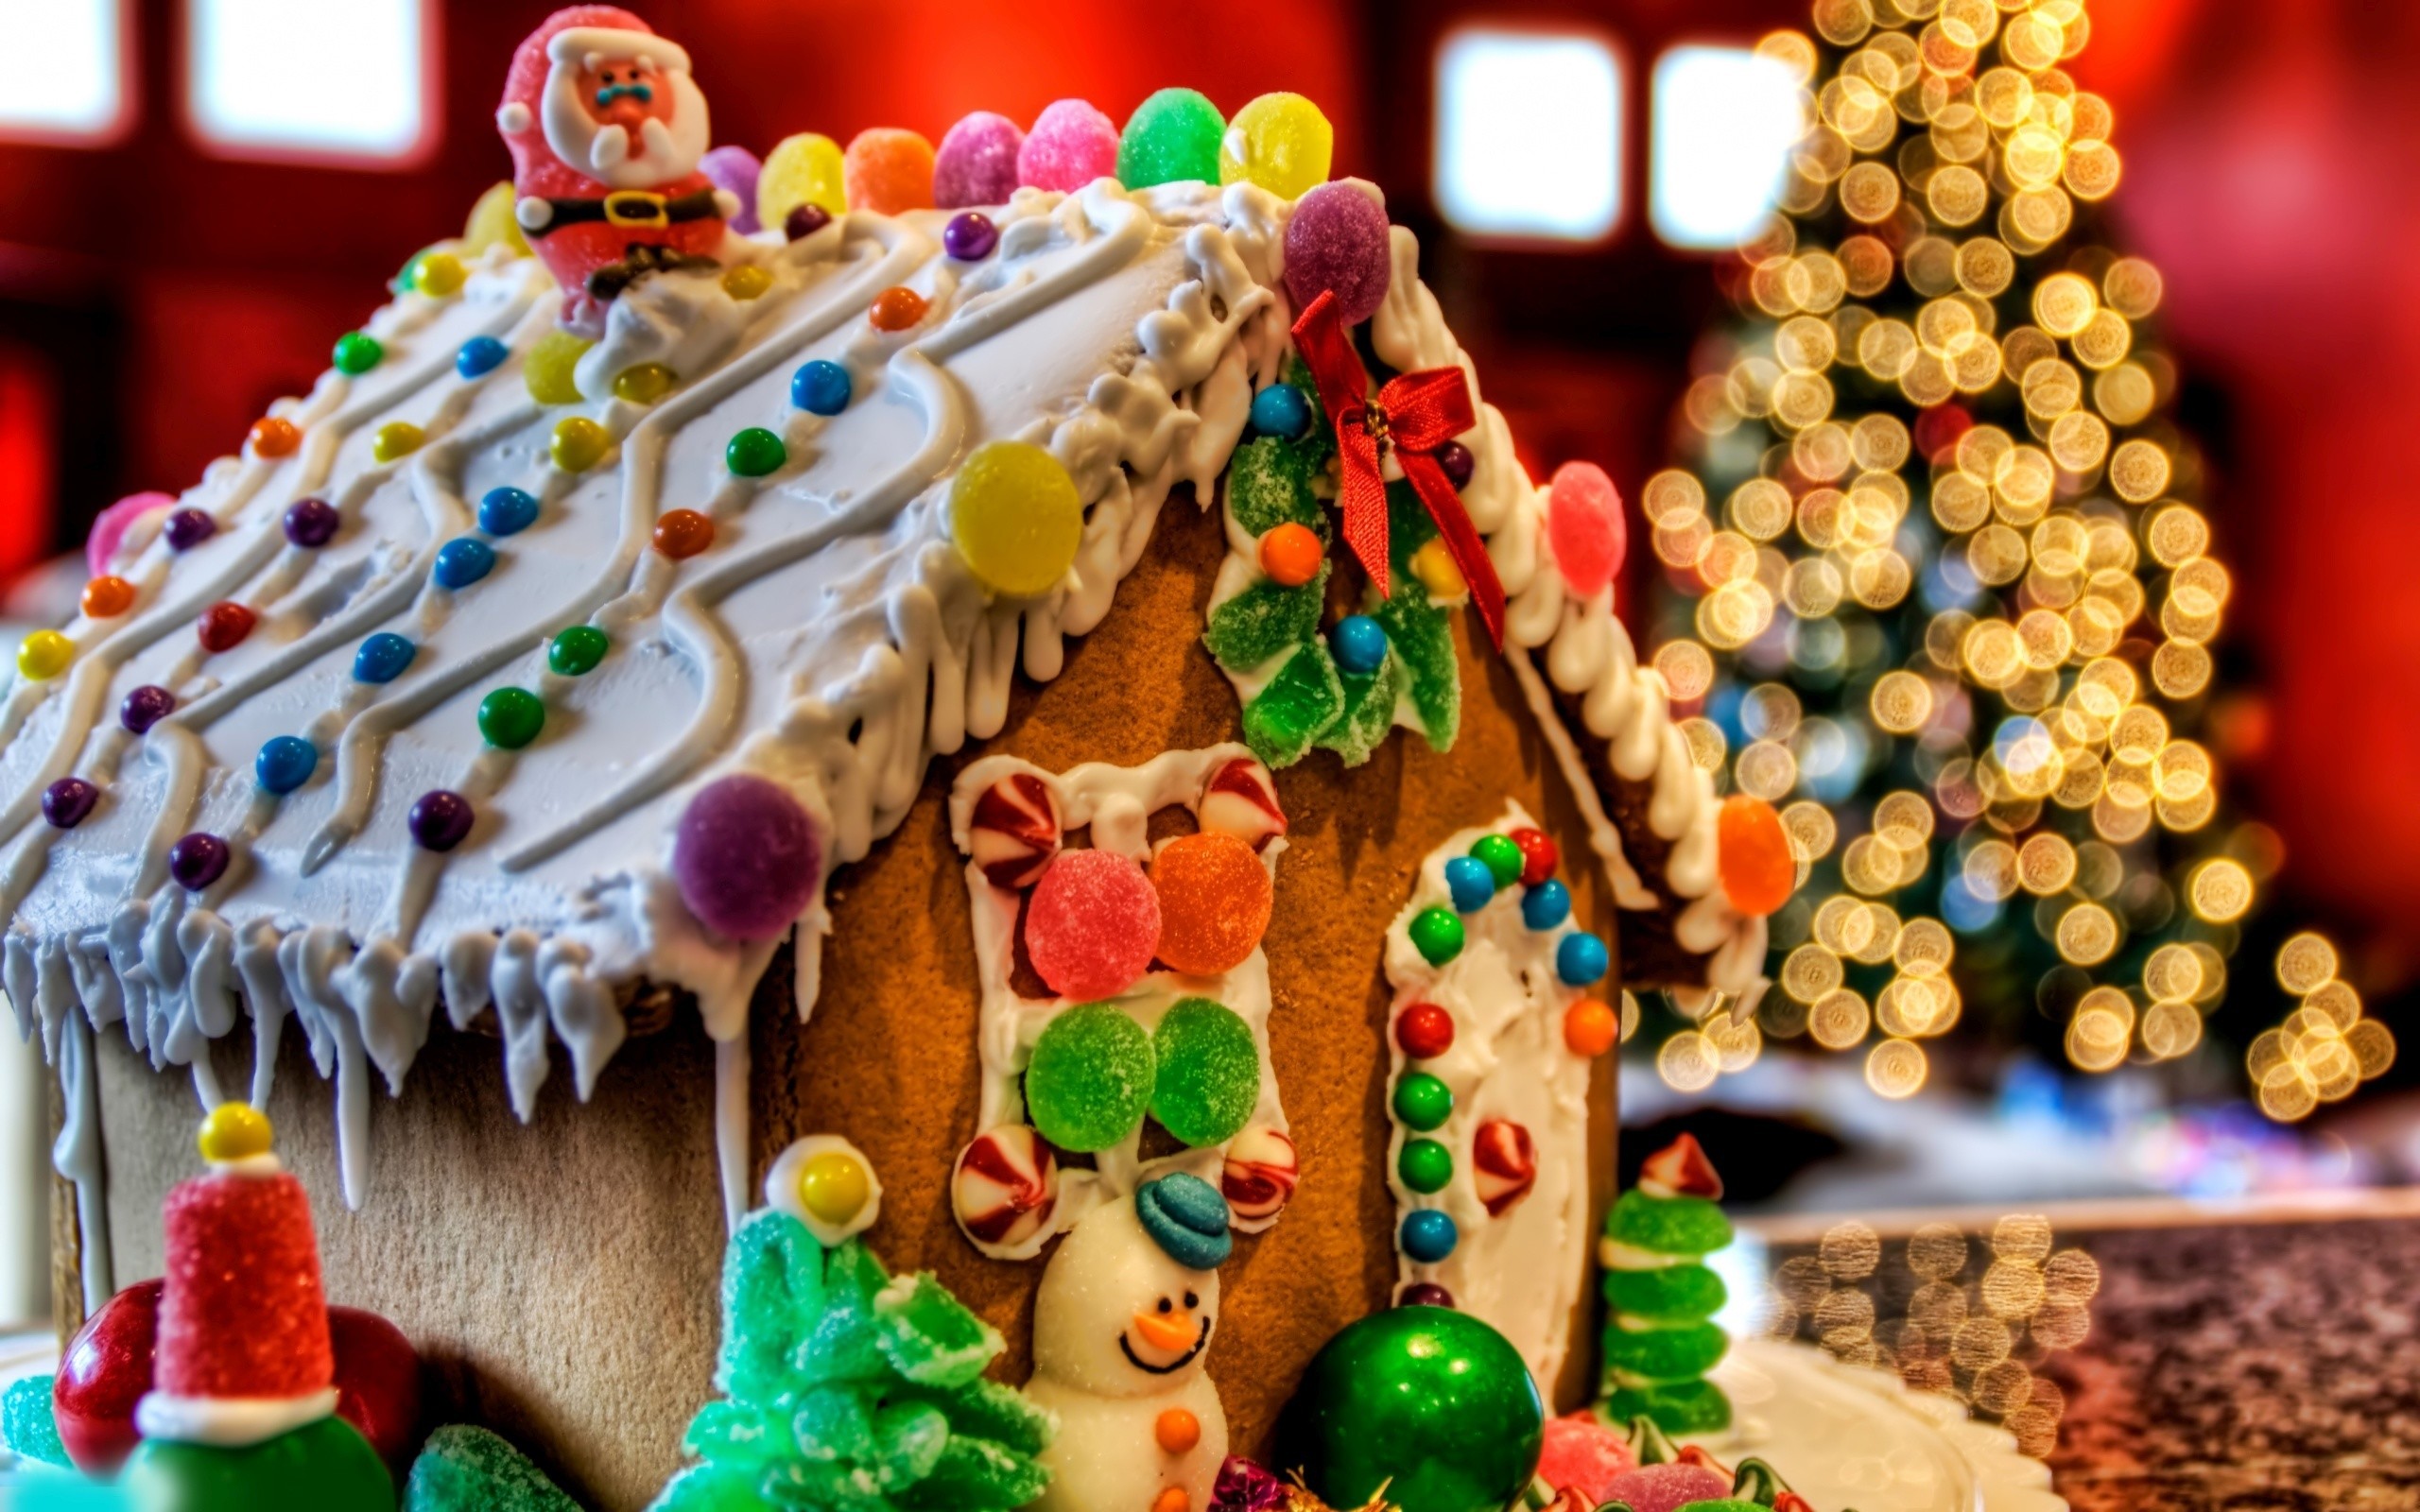 gingerbread wallpaper,gingerbread house,gingerbread,food,dessert,christmas decoration